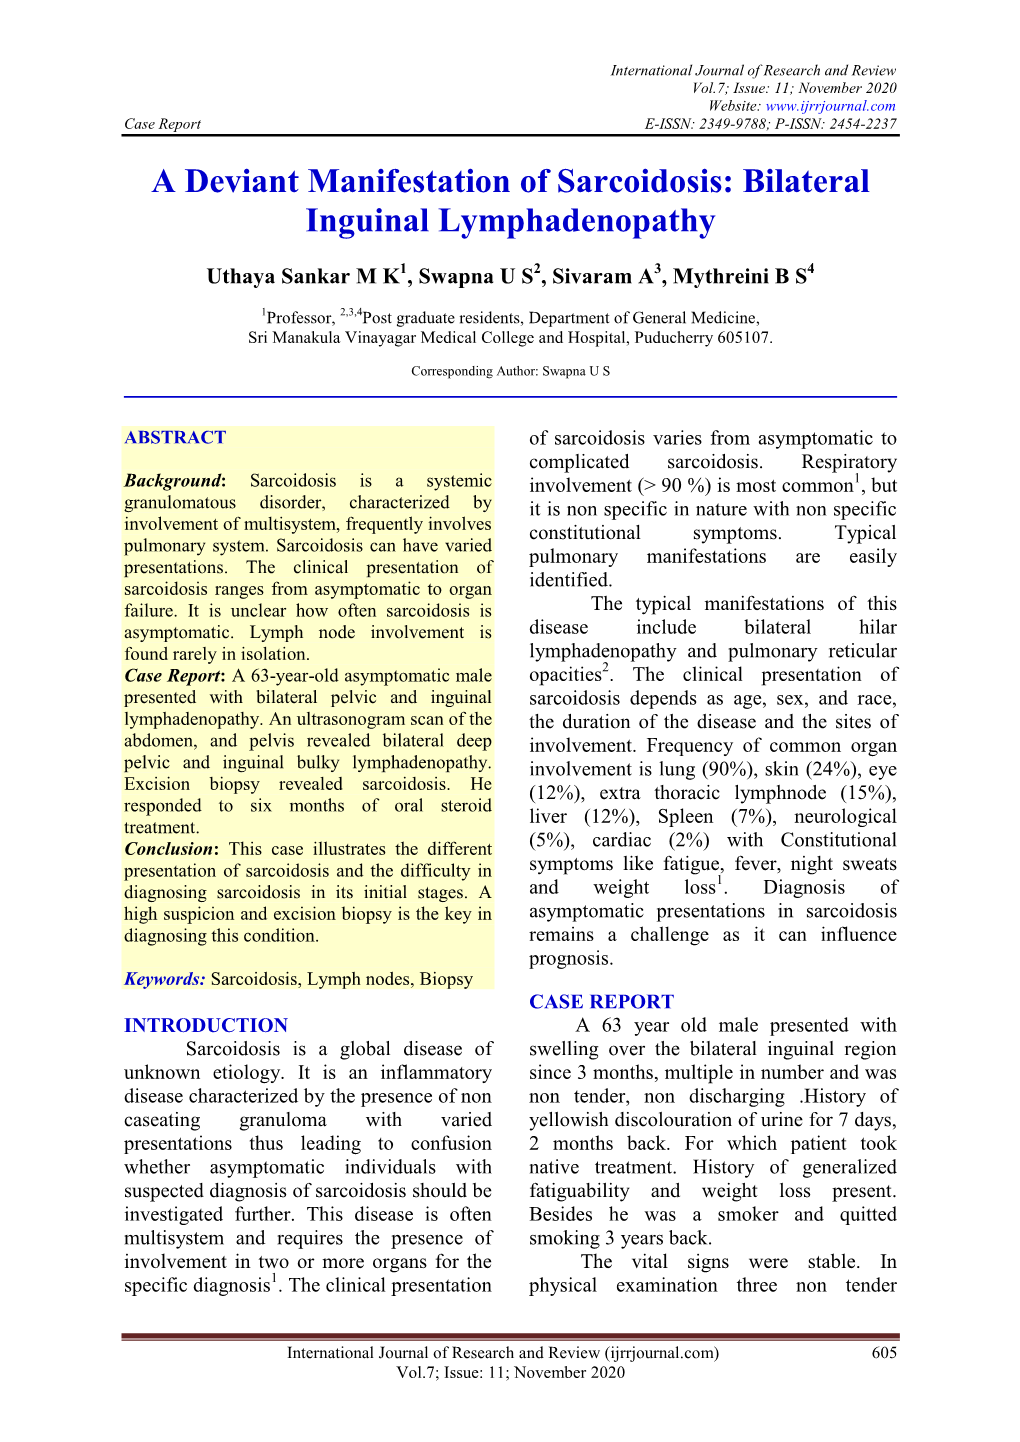 A Deviant Manifestation of Sarcoidosis: Bilateral Inguinal Lymphadenopathy